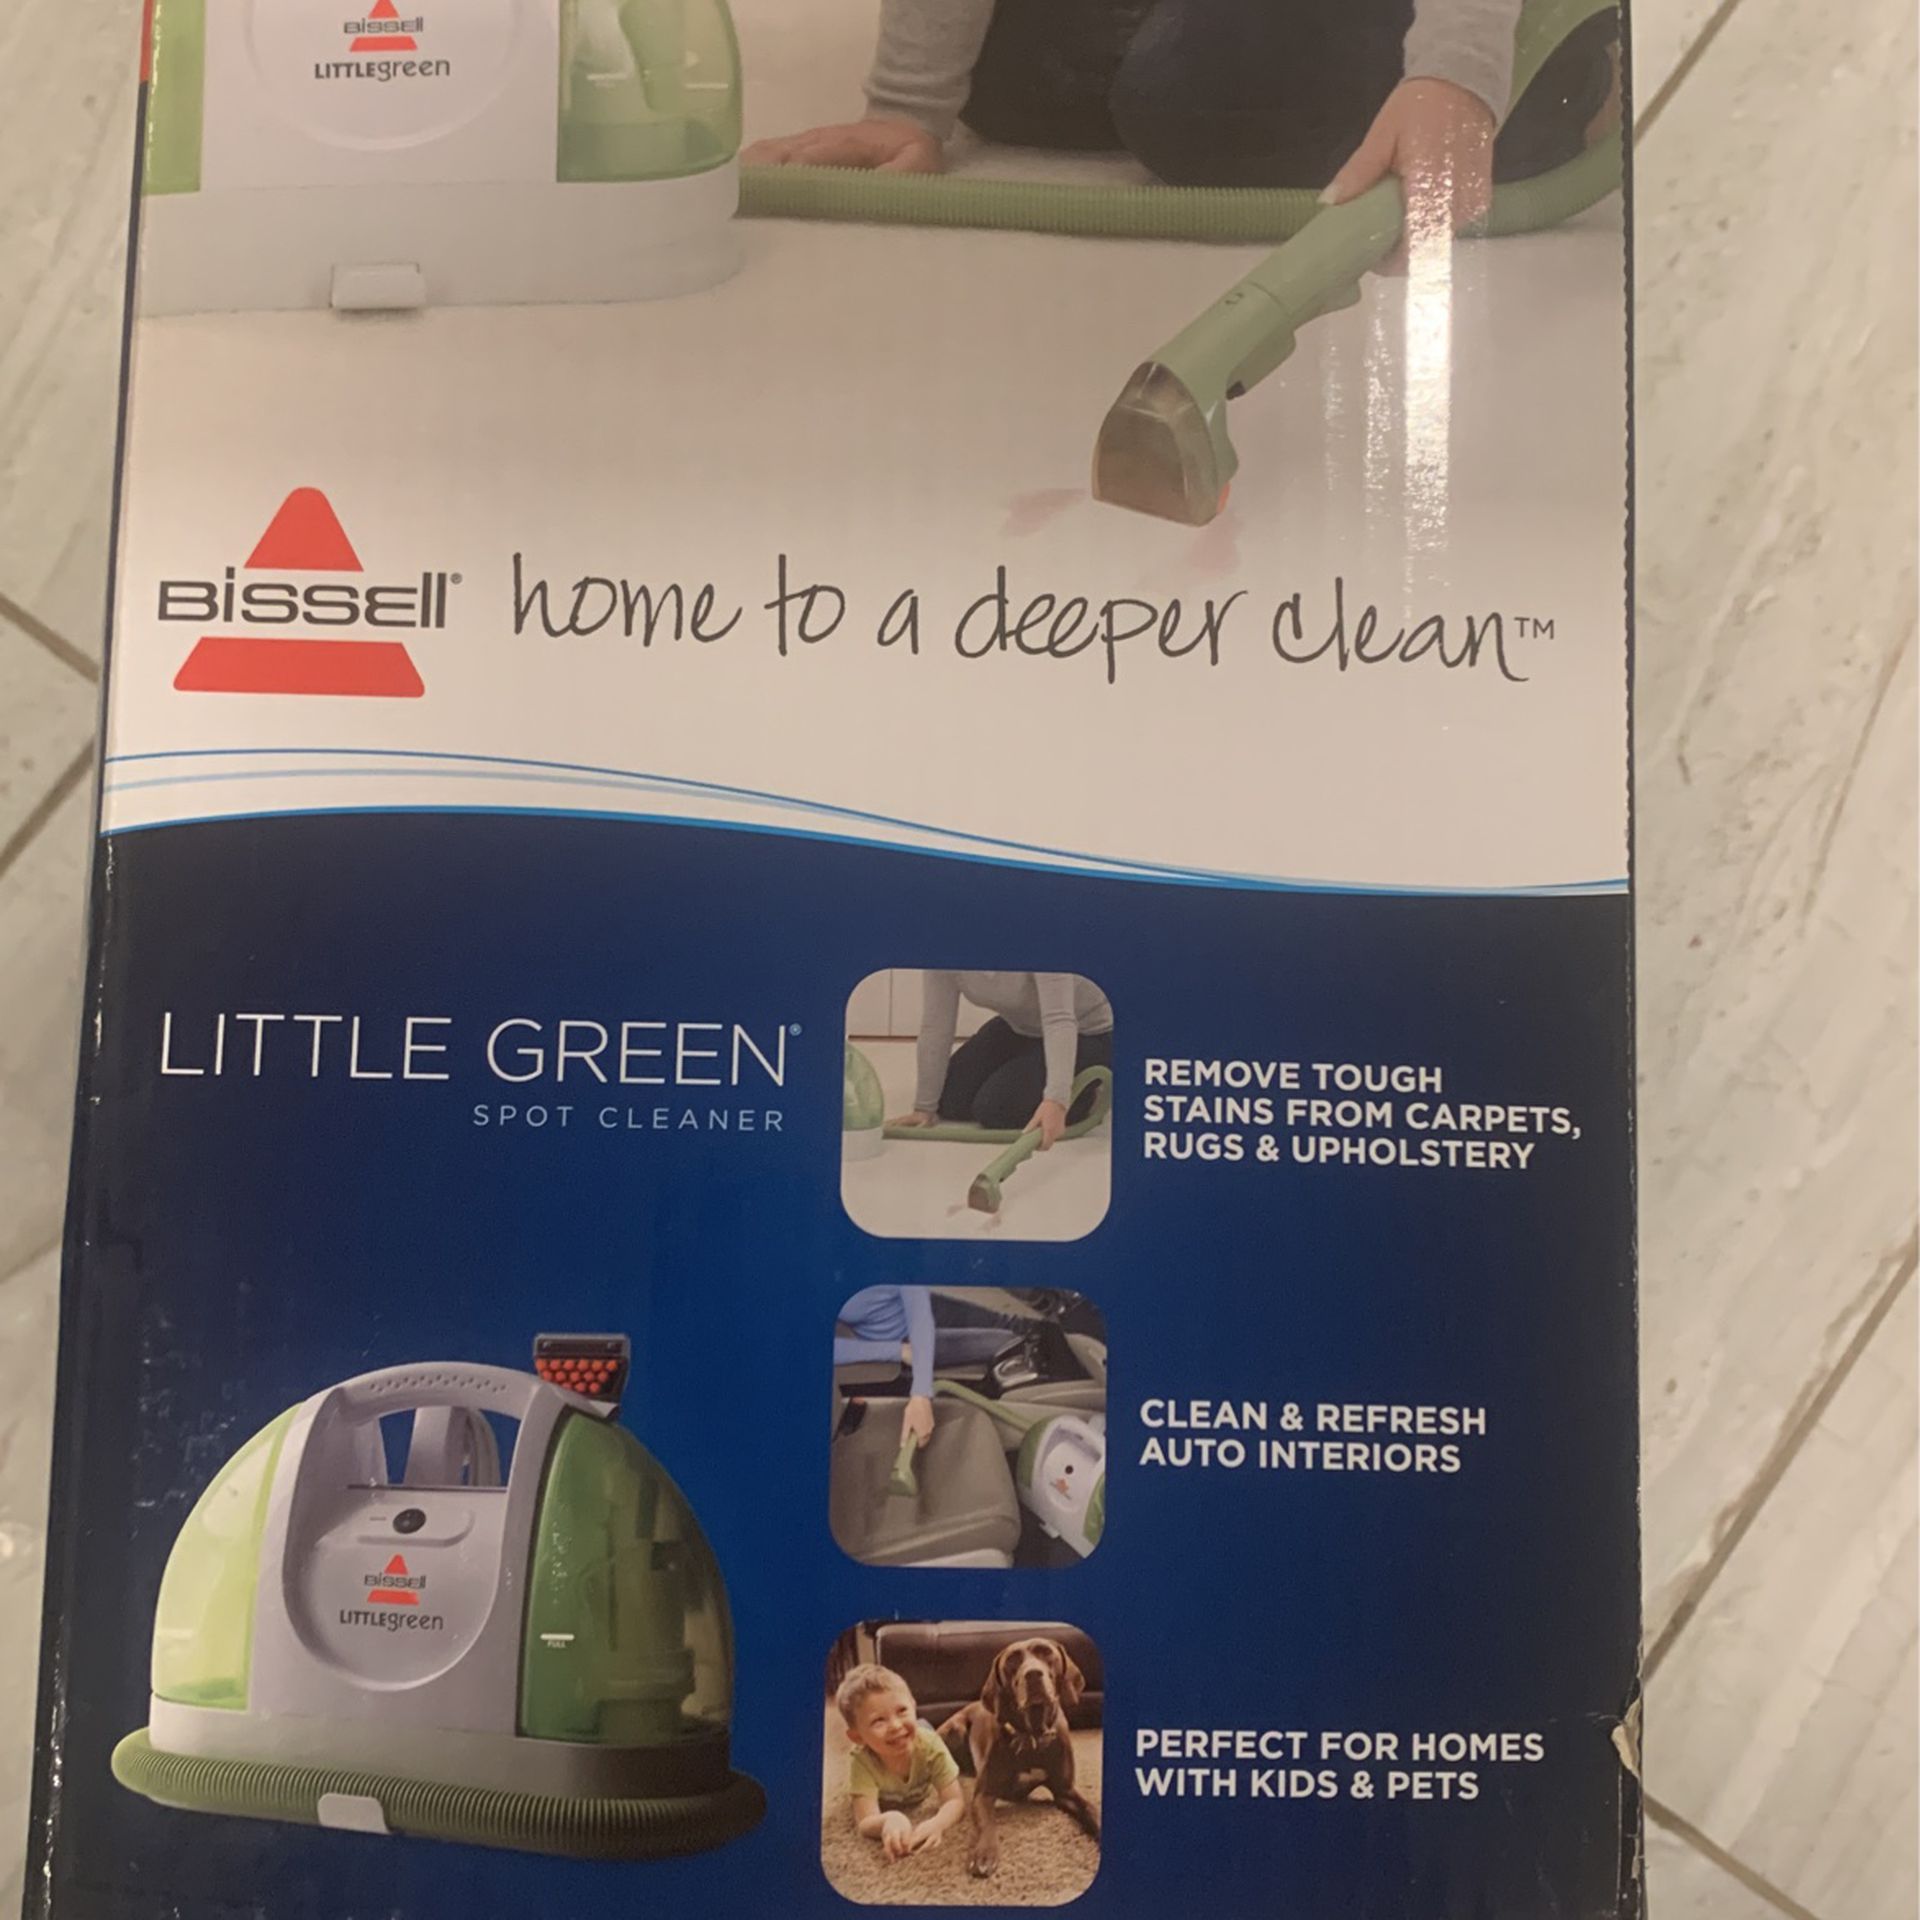  Bissell Little Green Spot Cleaner